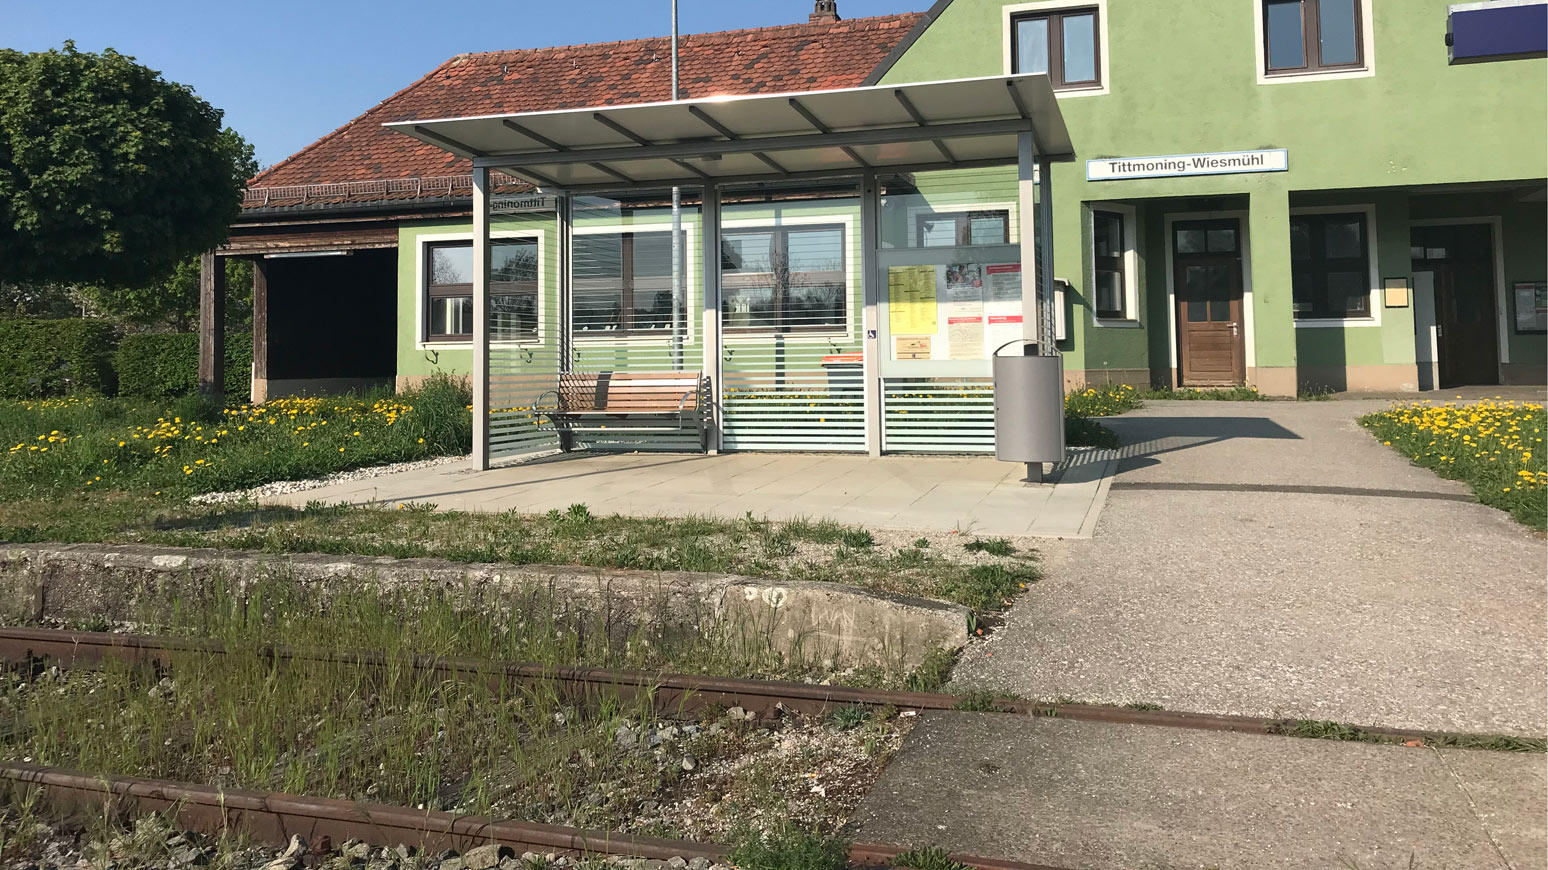 Bahnhof Tittmoning-Wiemühl